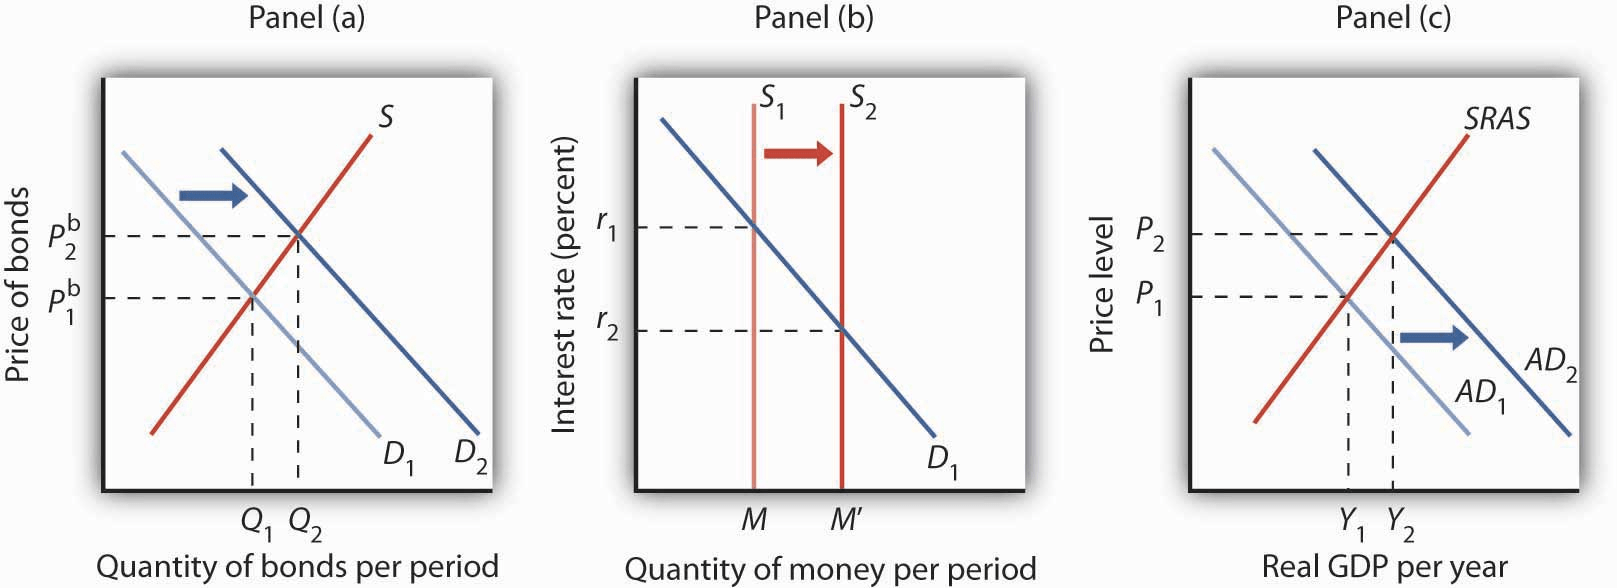 Panel (a) Quantity of bonds per period Panel (b) 2 Quantity of money
per period Panel (c) SRAS AD2 AD Real GDP per year
